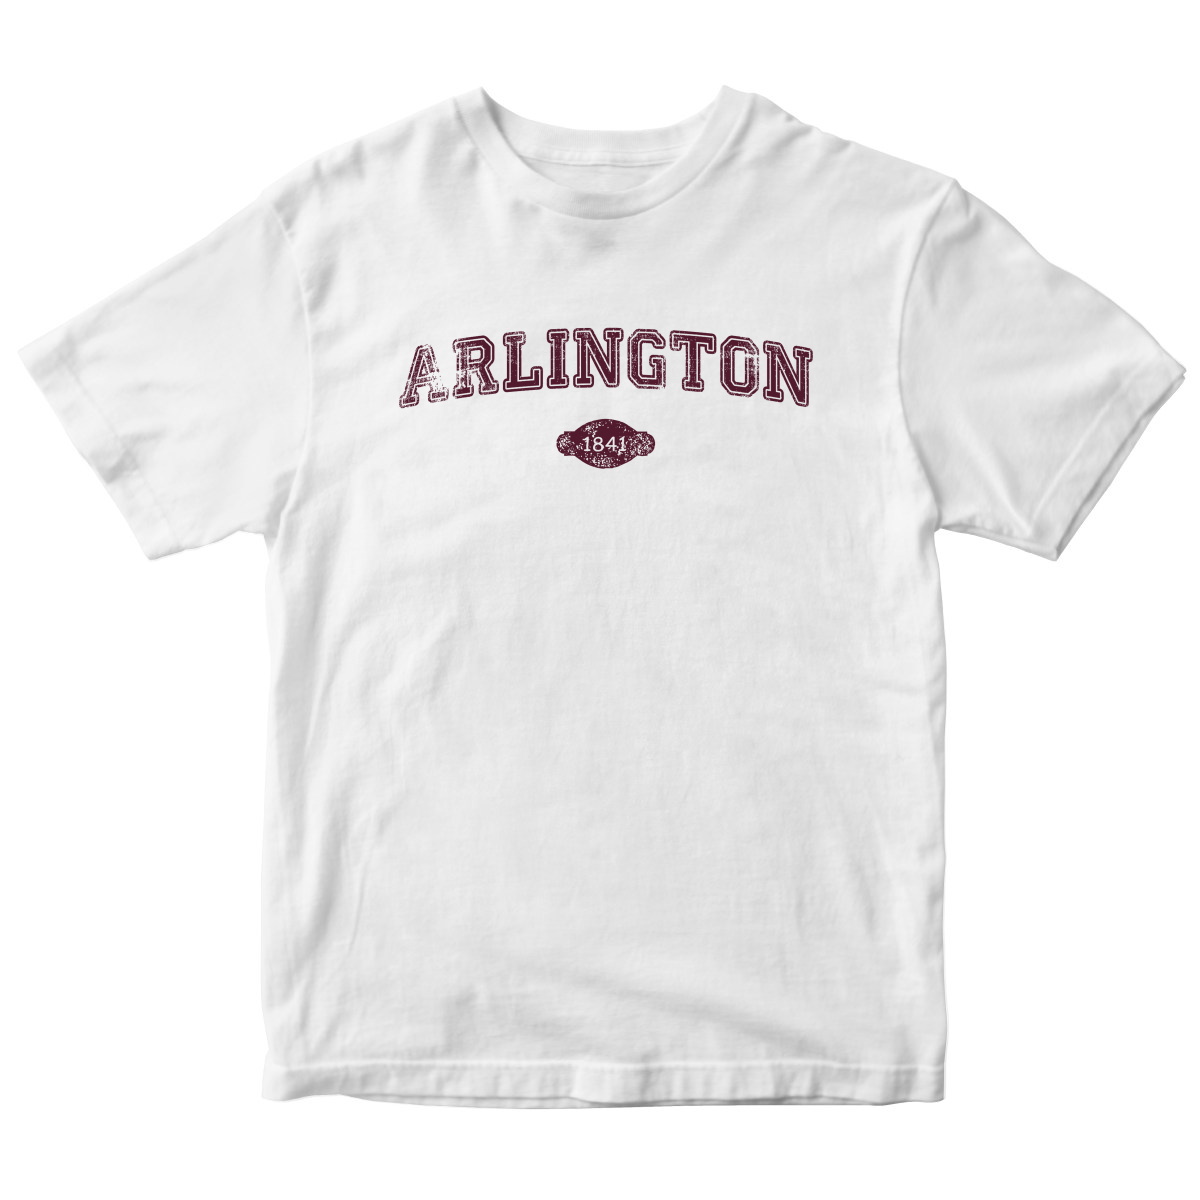 Arlington 1841 Represent Toddler T-shirt | White